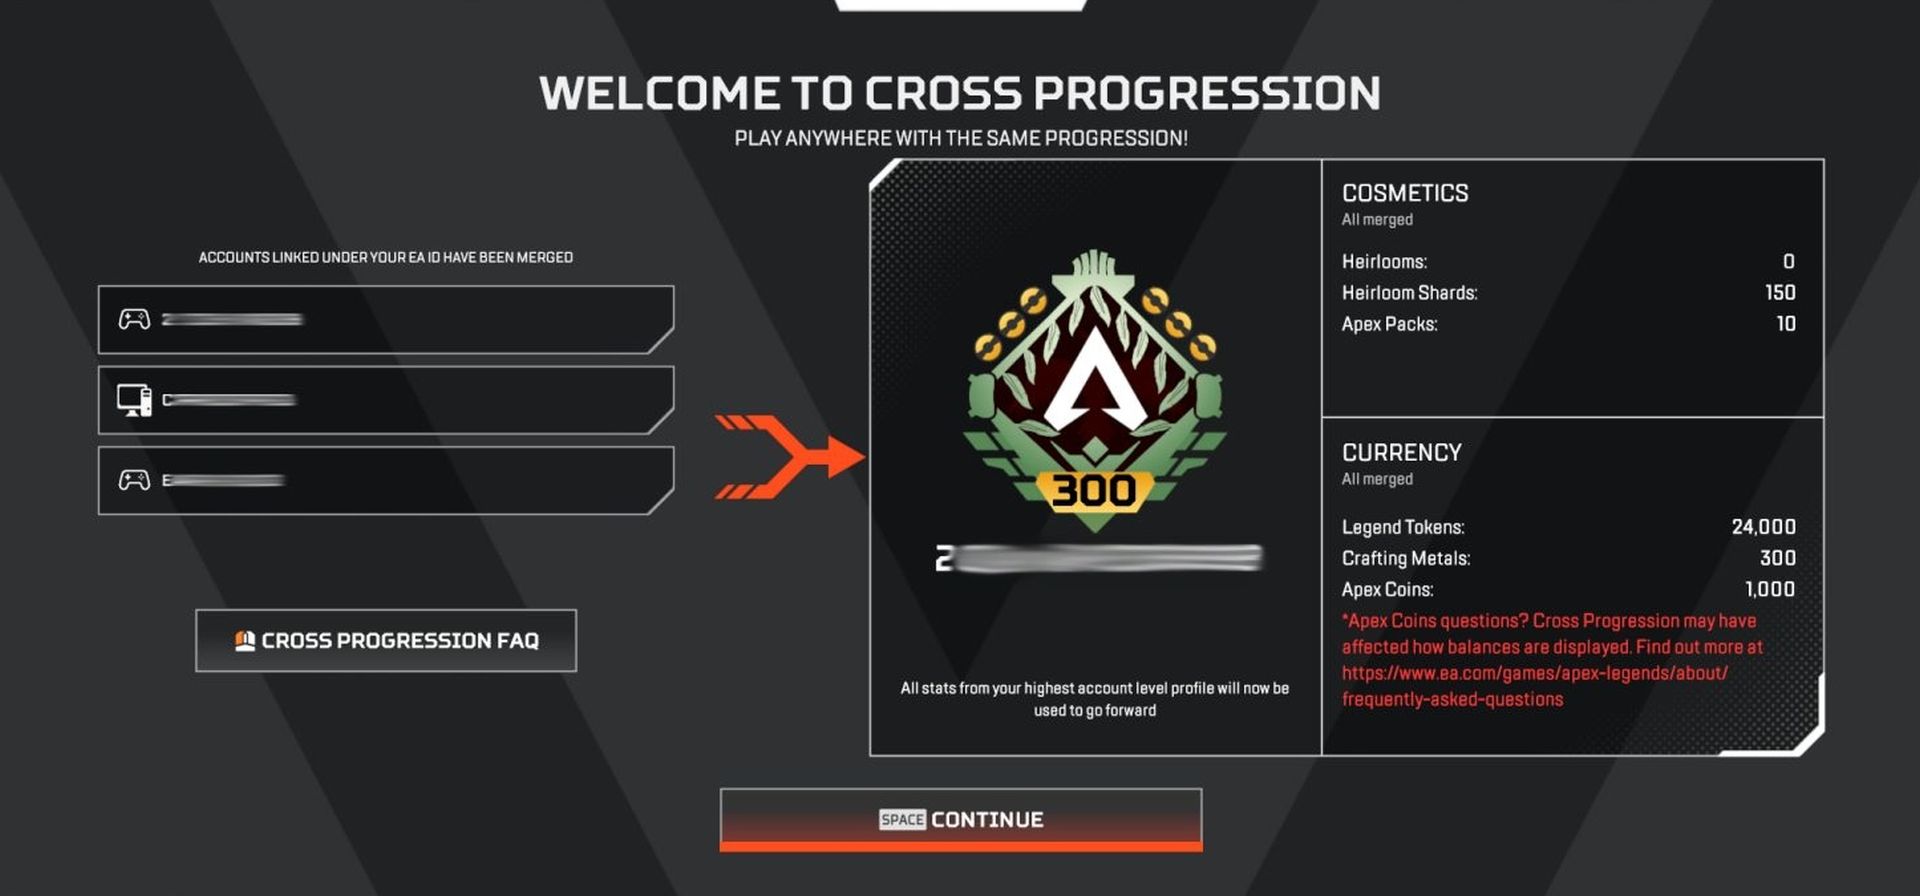 Apex Legends cross progression